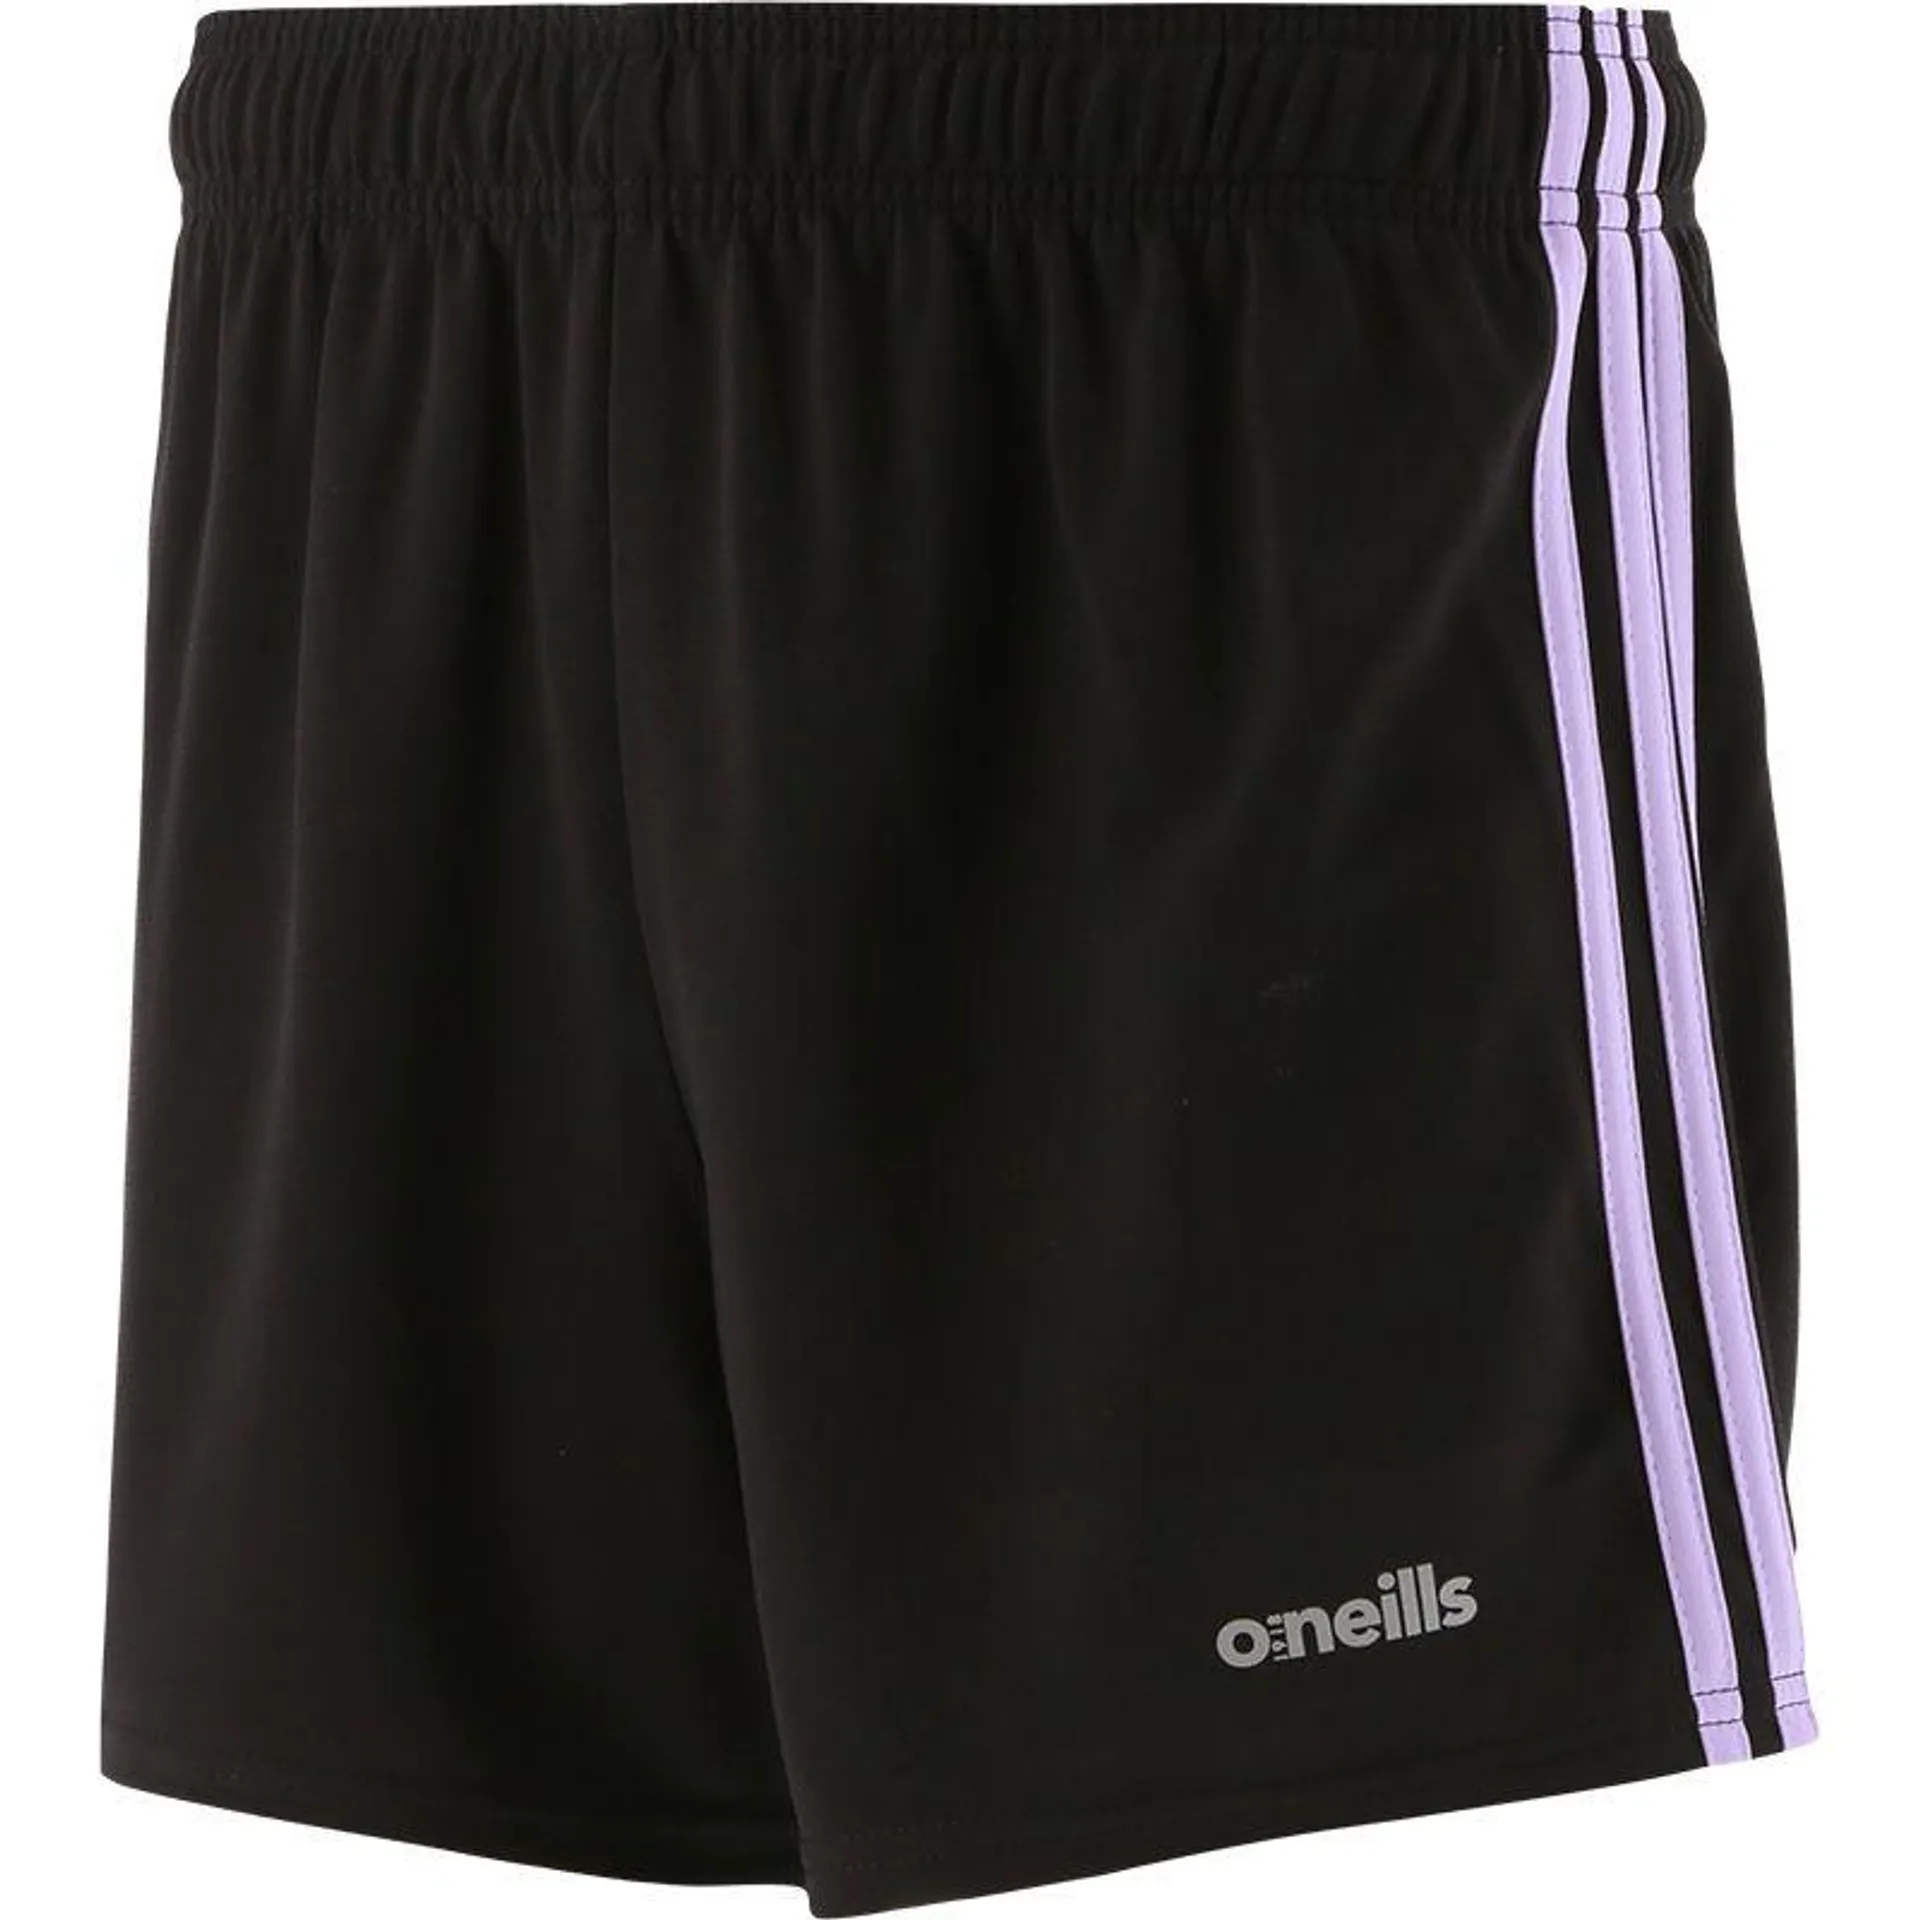 O'Neills Women's Mourne Shorts Black / Purple